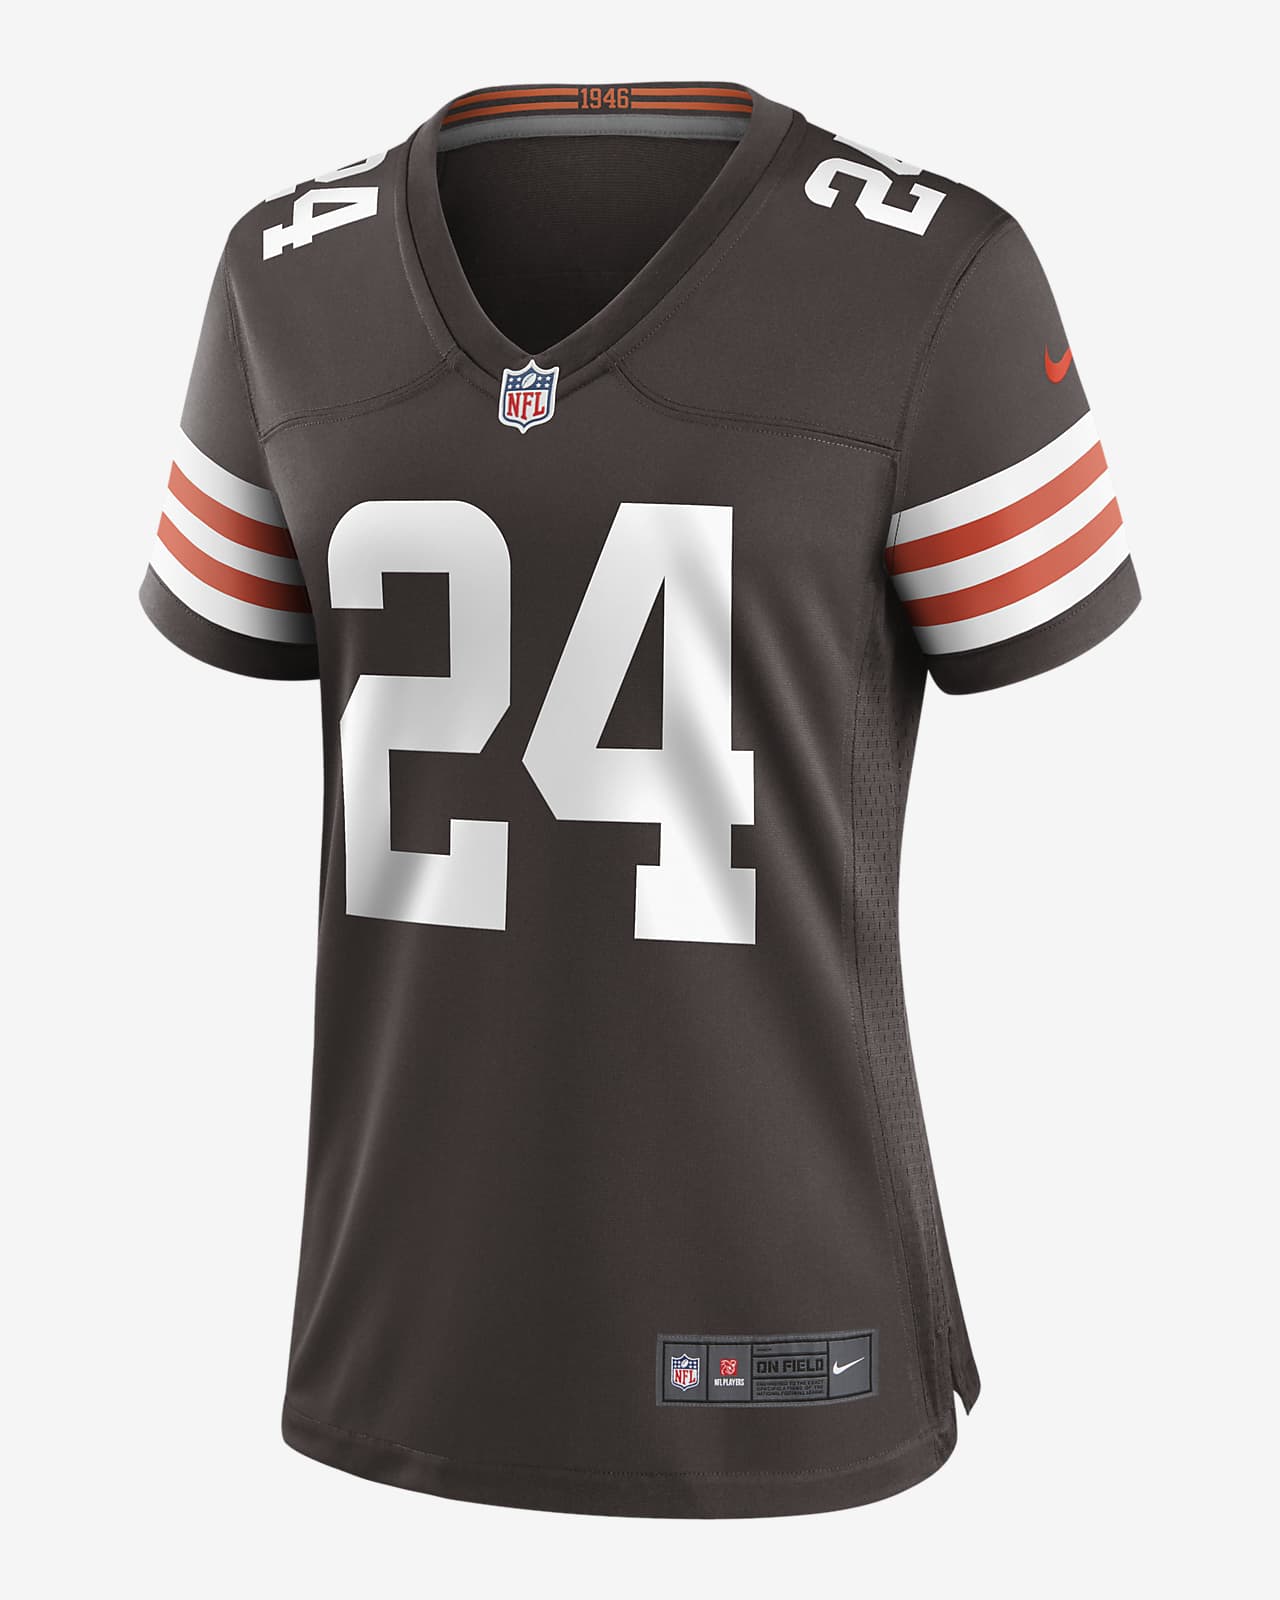 NFL Cleveland Browns (Nick Chubb) Women's Game Football Jersey